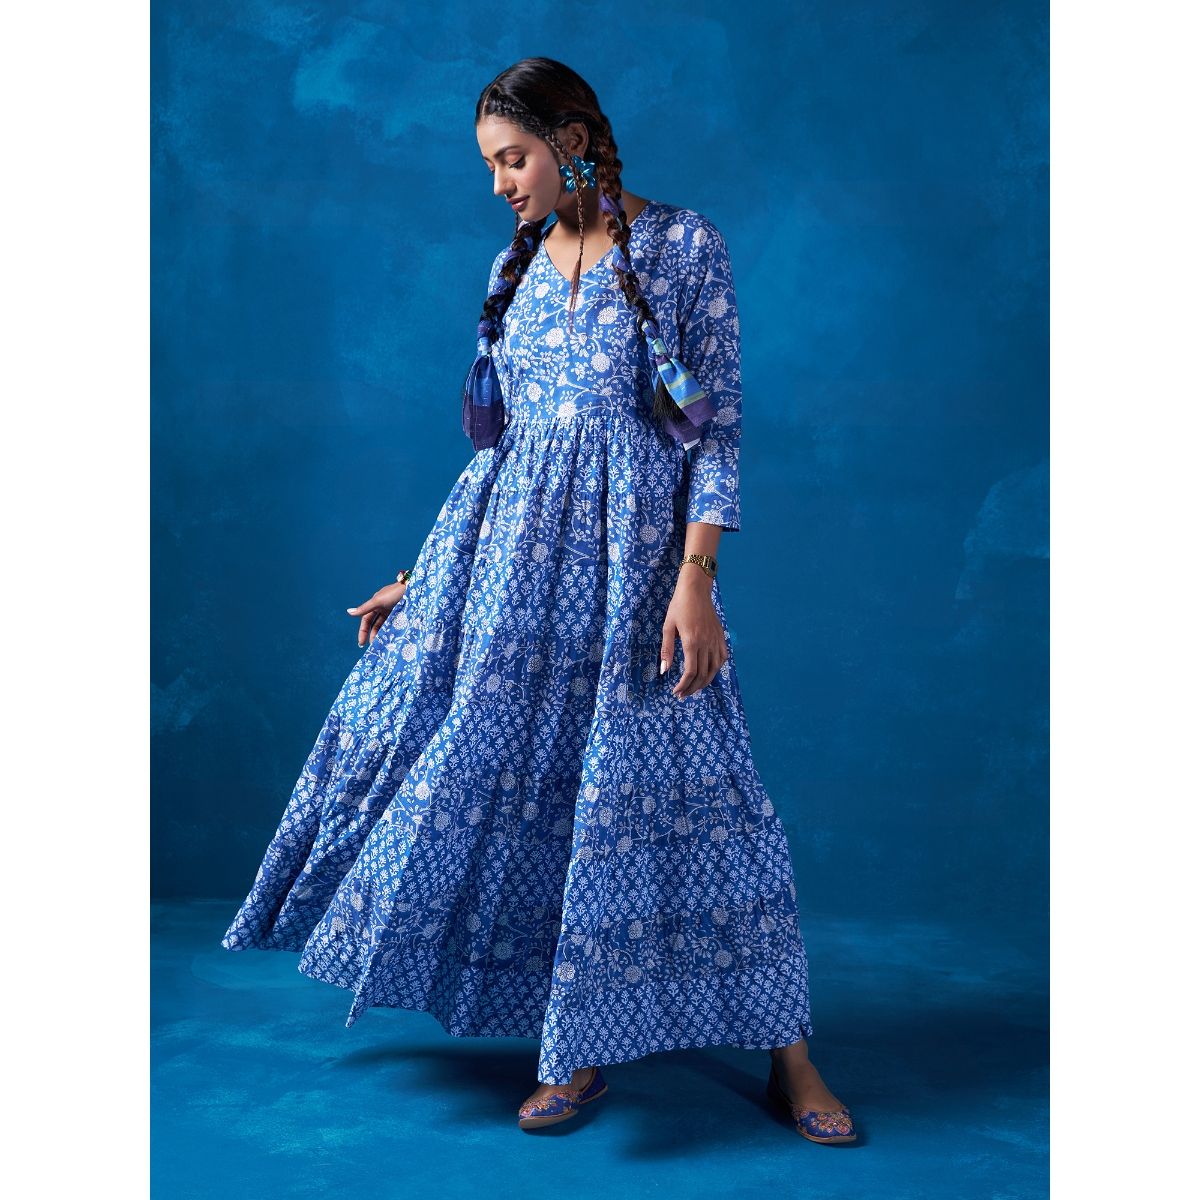 Medium blue maxi dresses | HOWTOWEAR Fashion